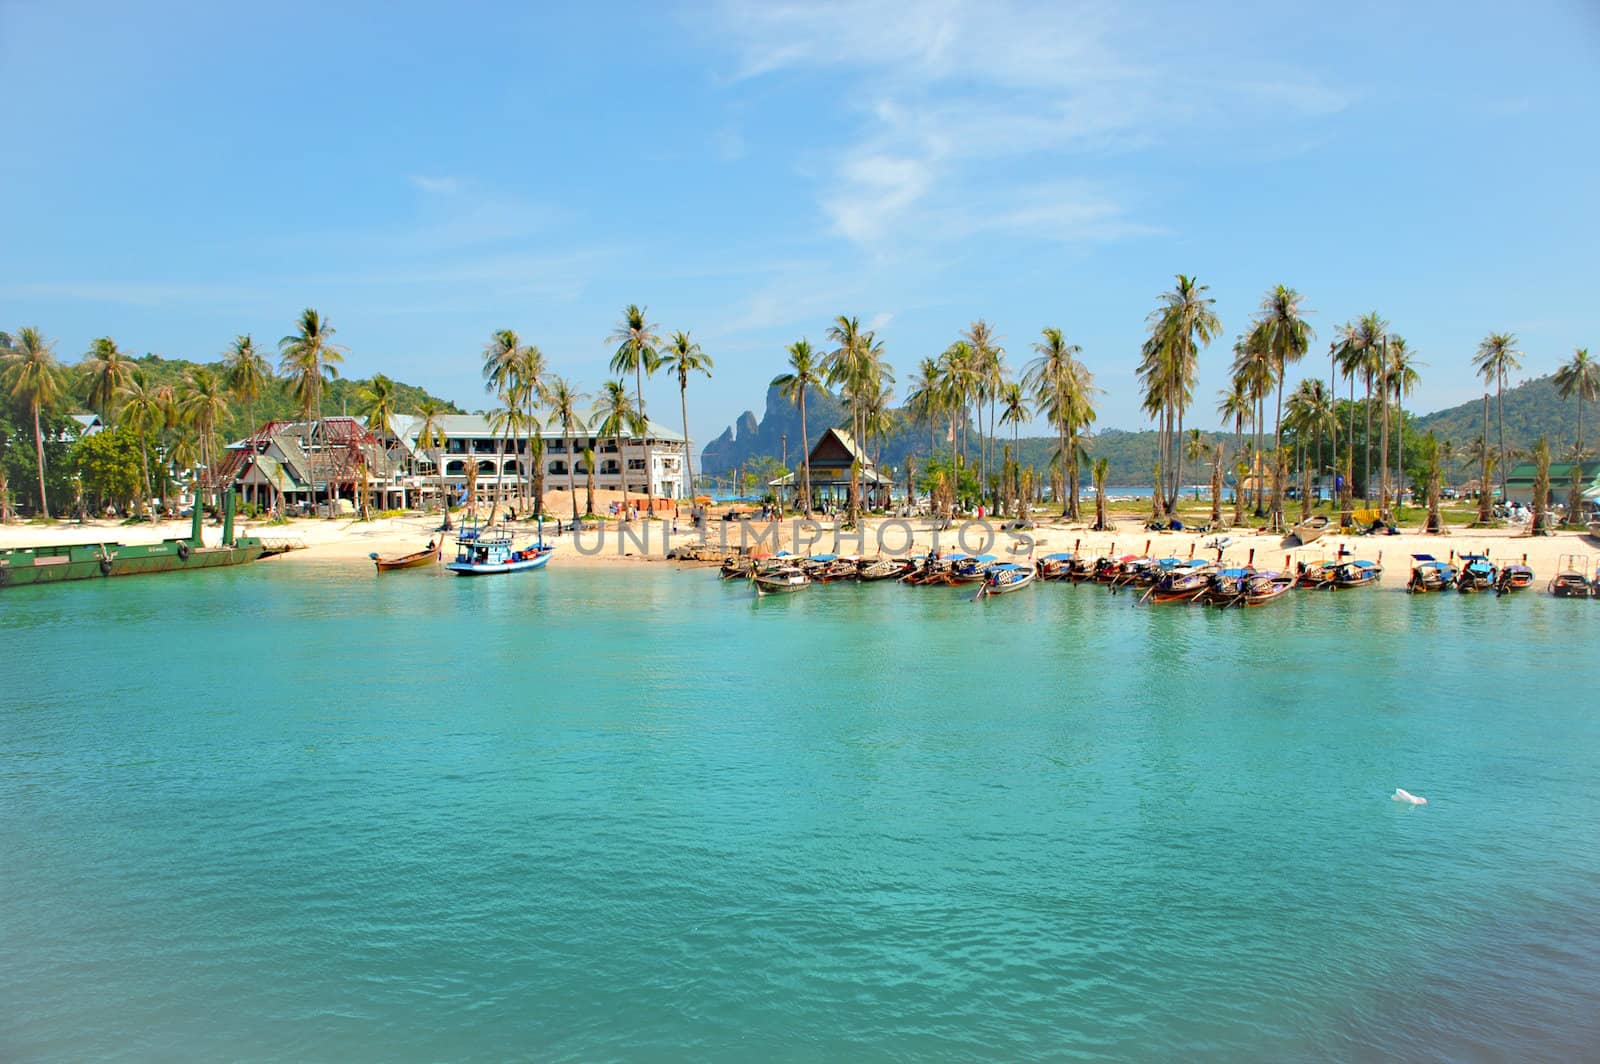 A beuatifu beach with boats and palmtrees